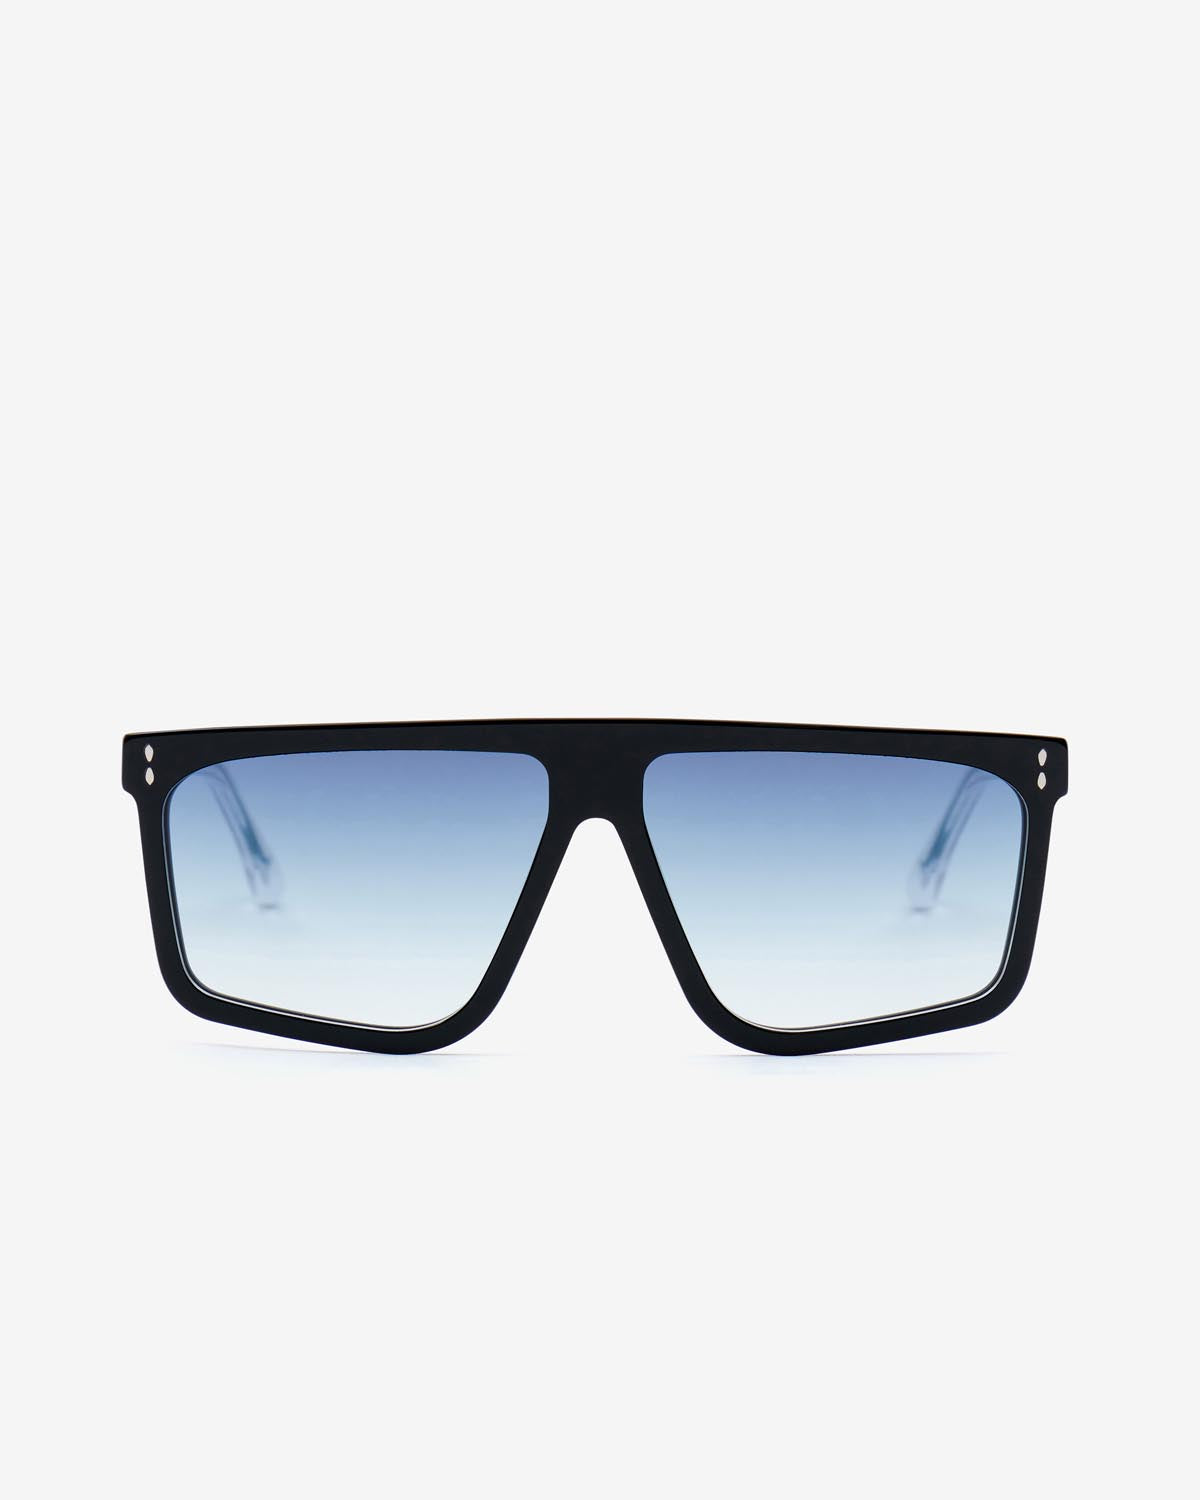 Bluma sunglasses Woman Black-gray azure 2